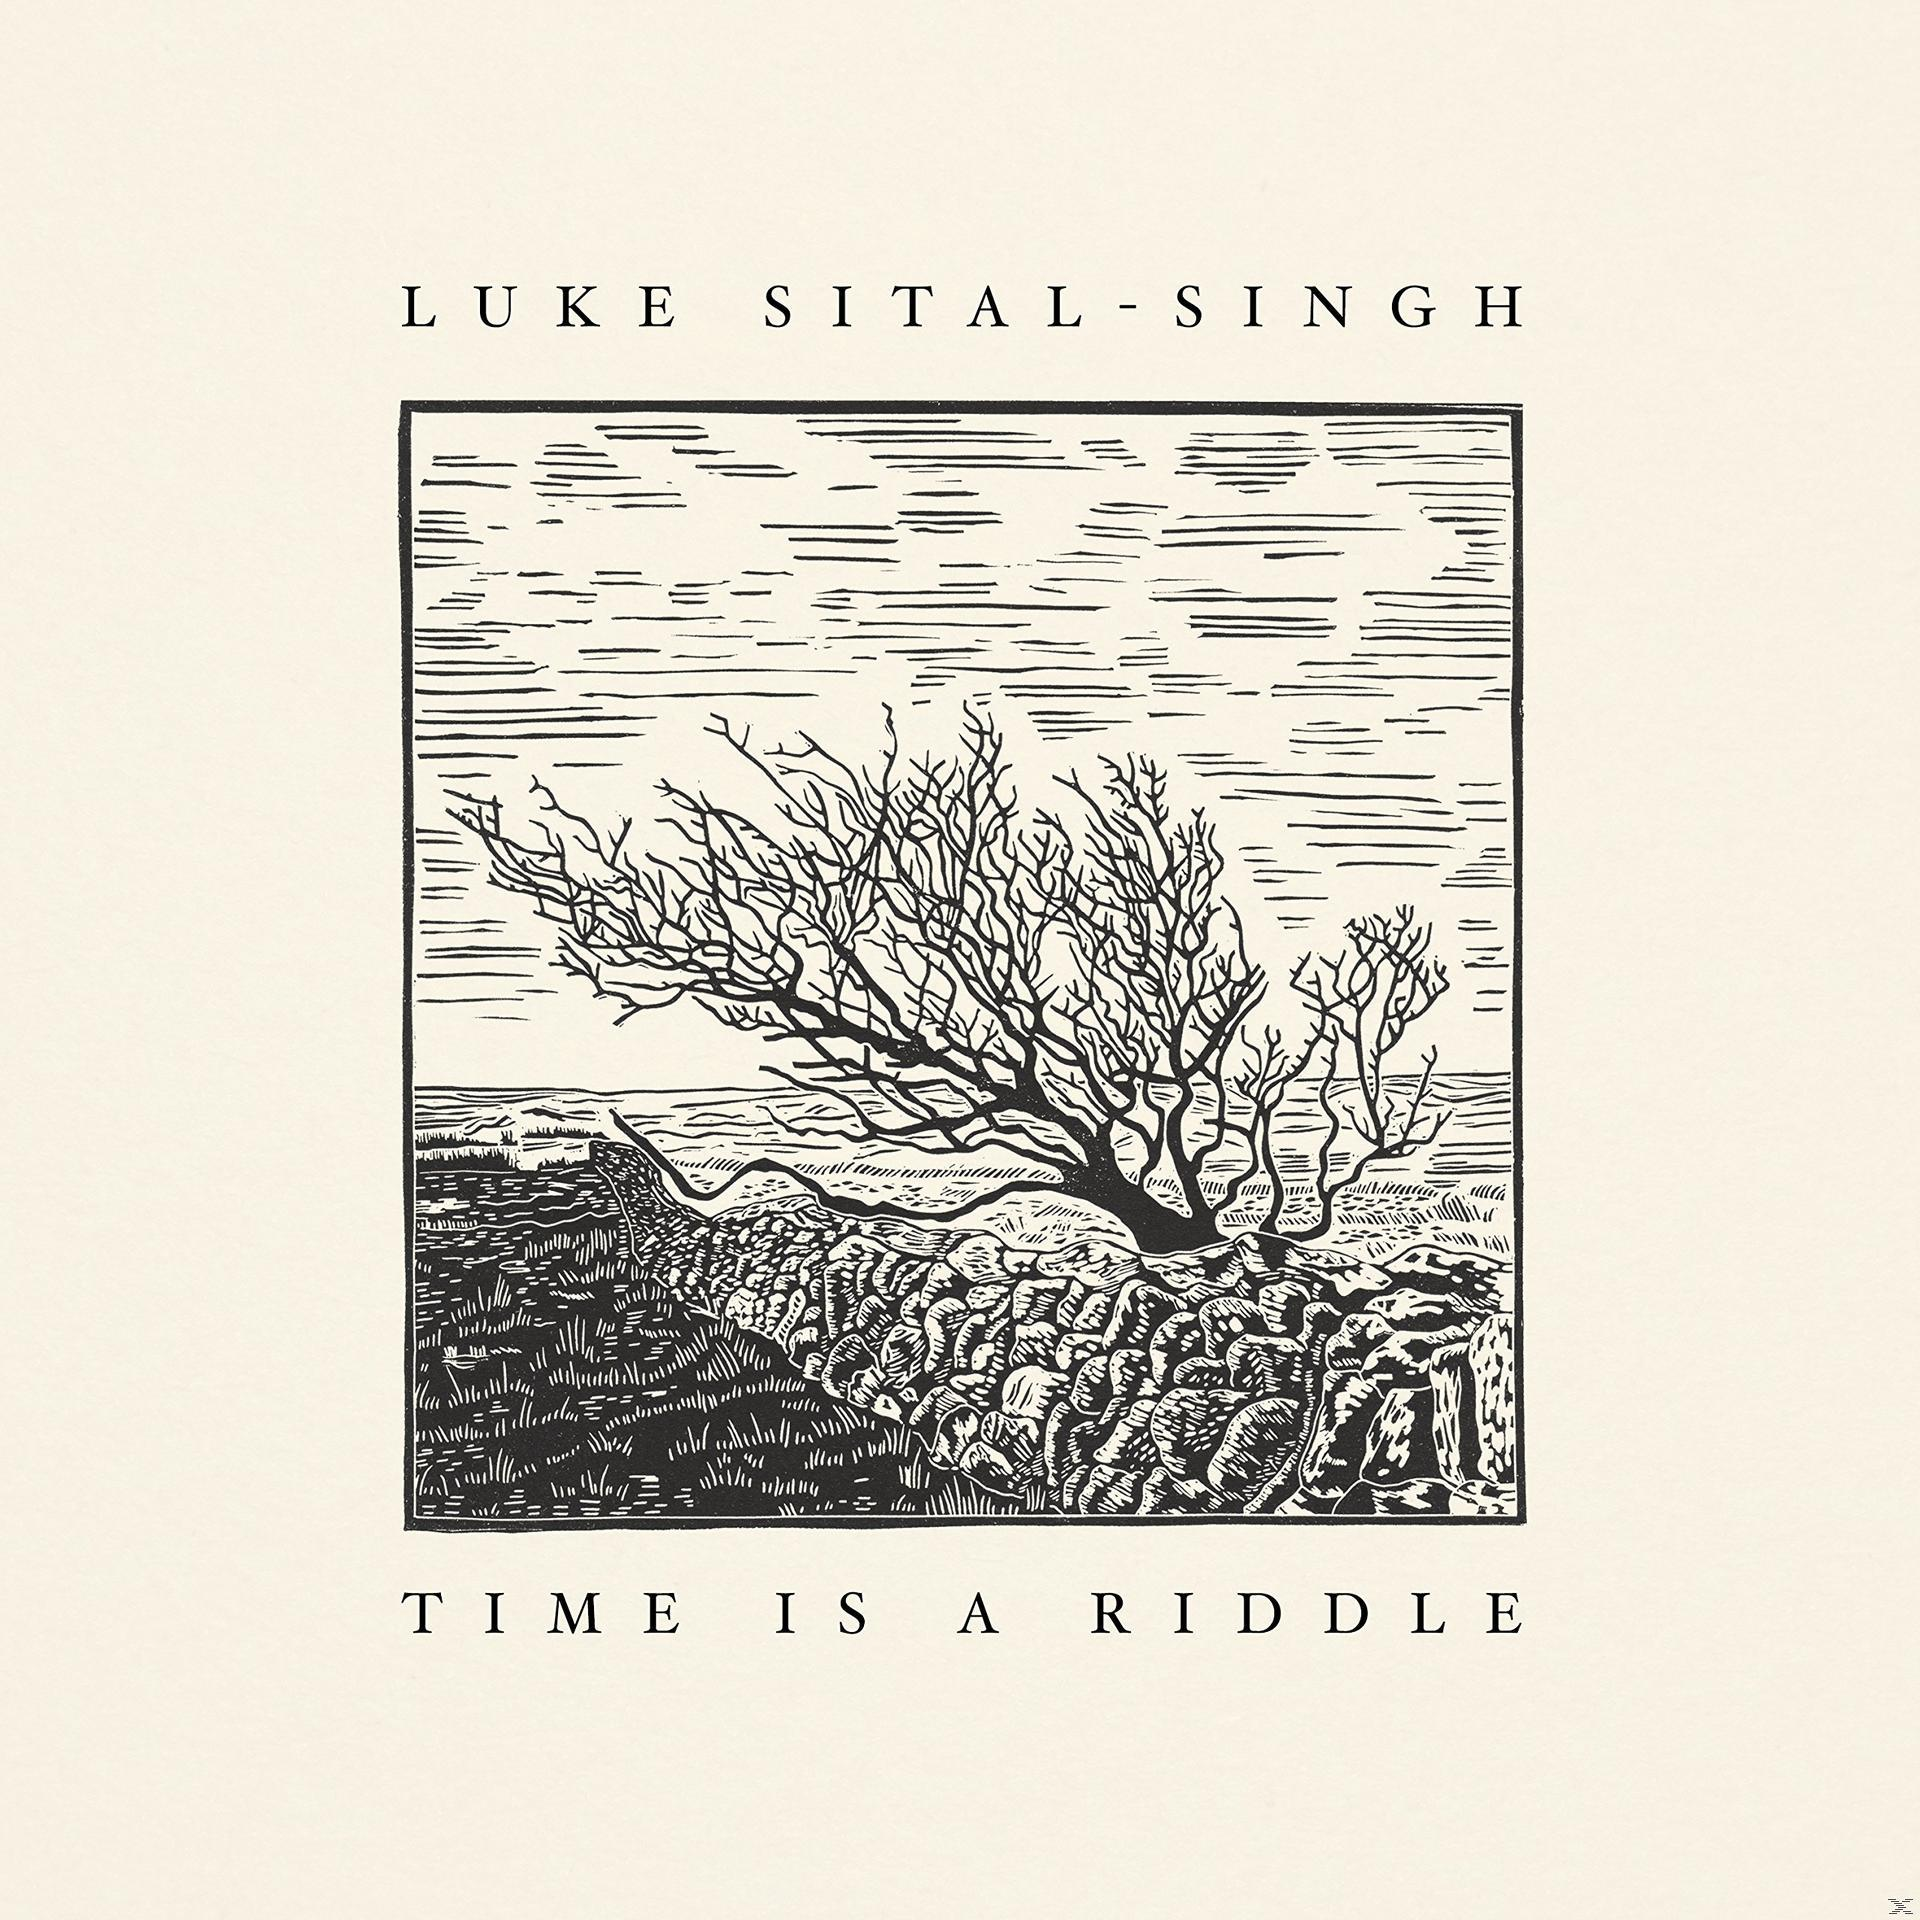 Luke Sital-singh - Time (CD) - A Riddle Is